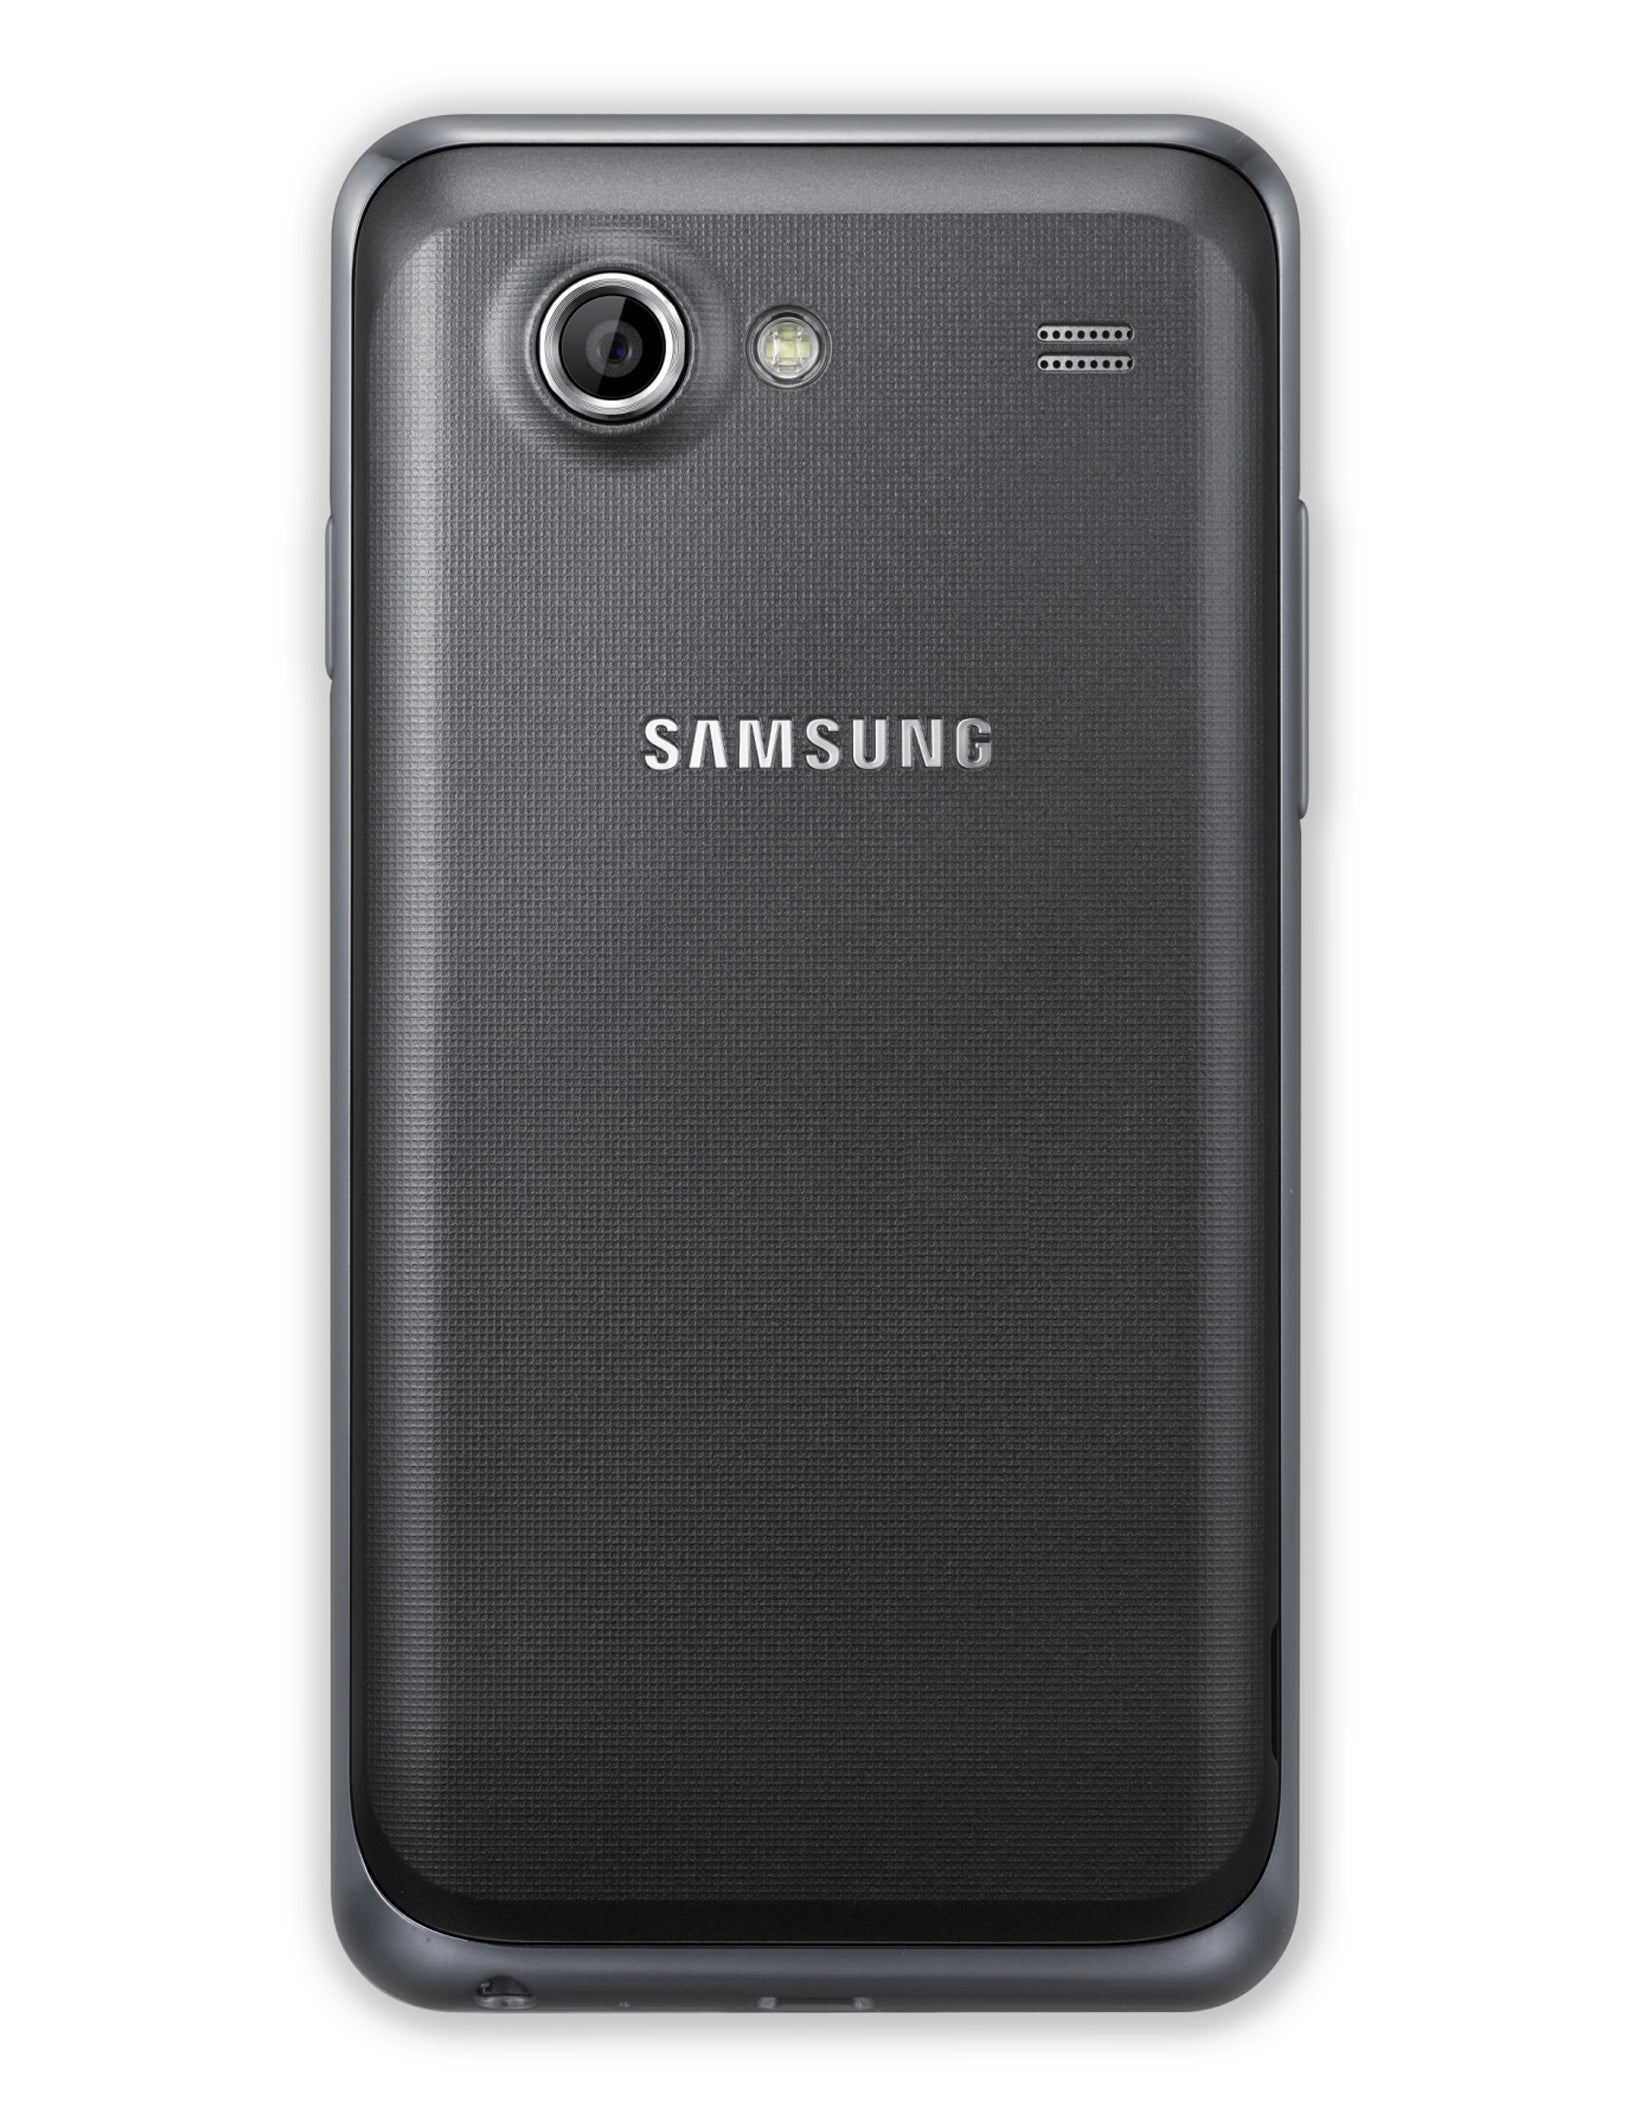 Самсунг 9070 Galaxy Advance